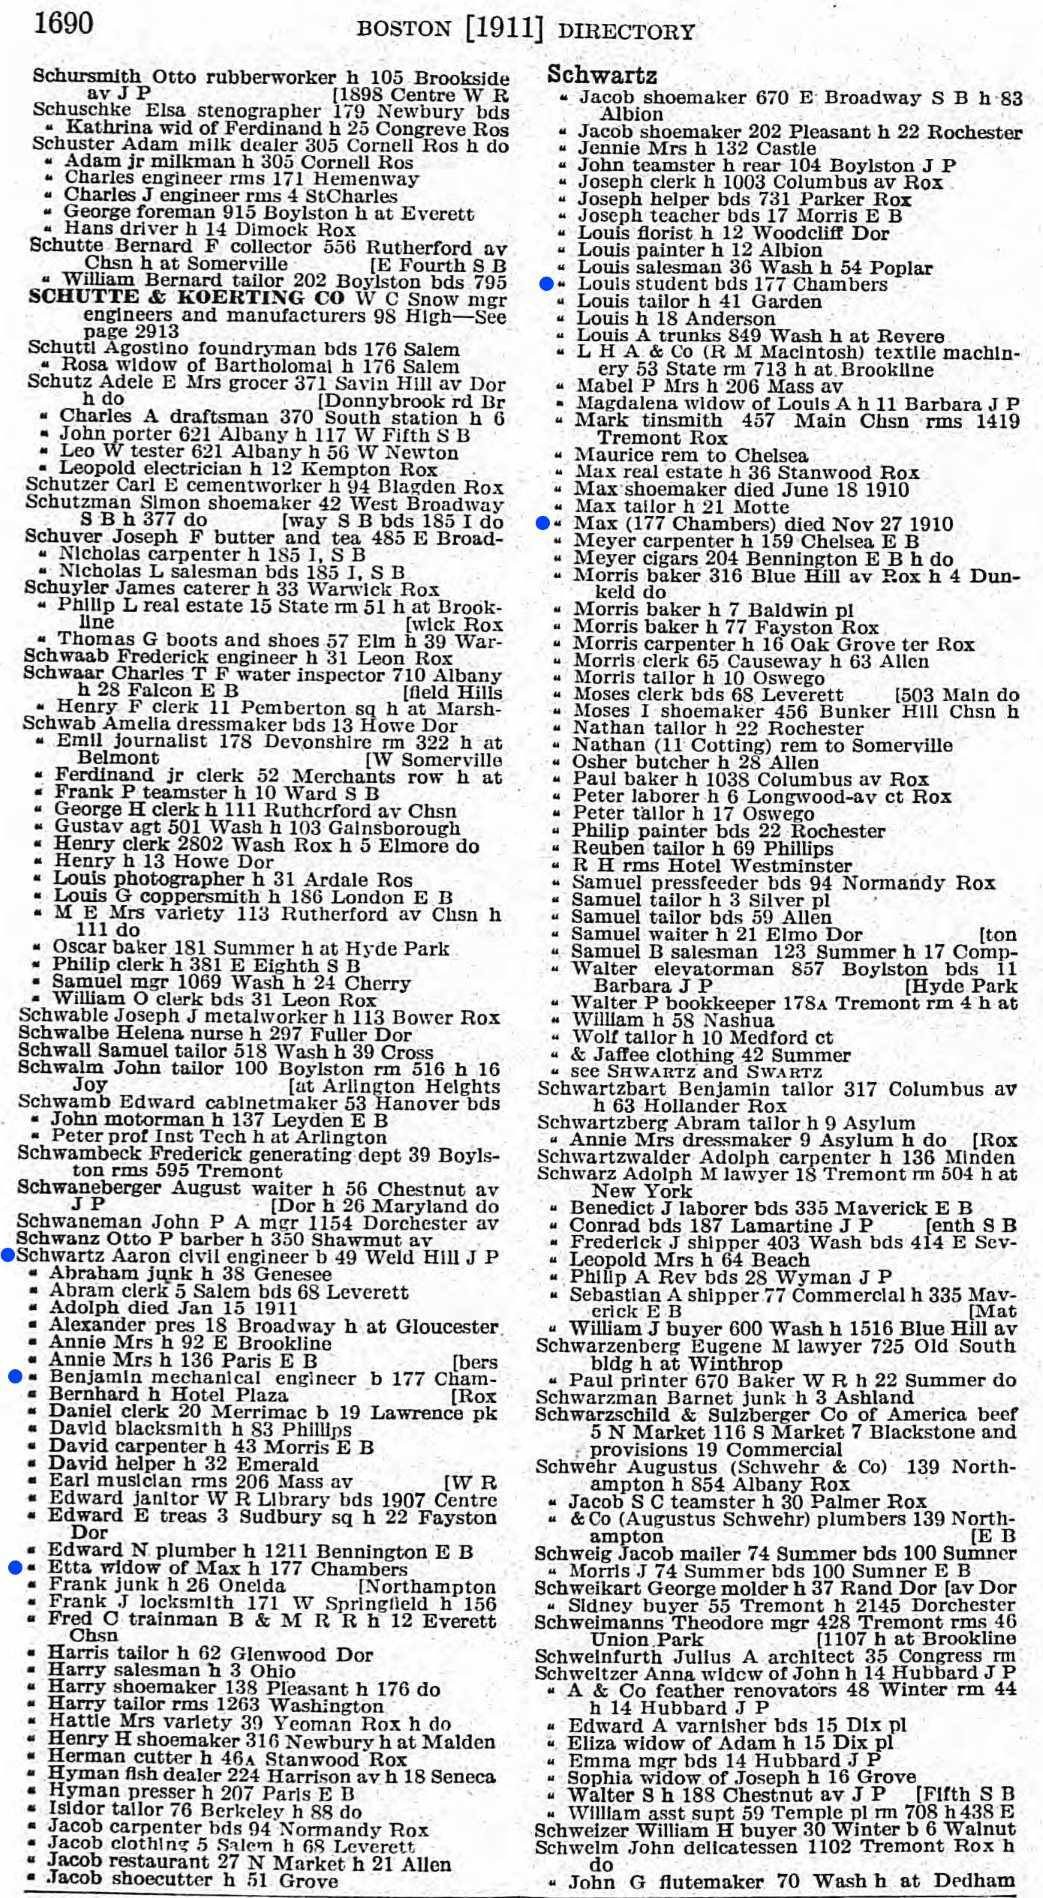 Schwartz Family in 1911 Boston City Directory